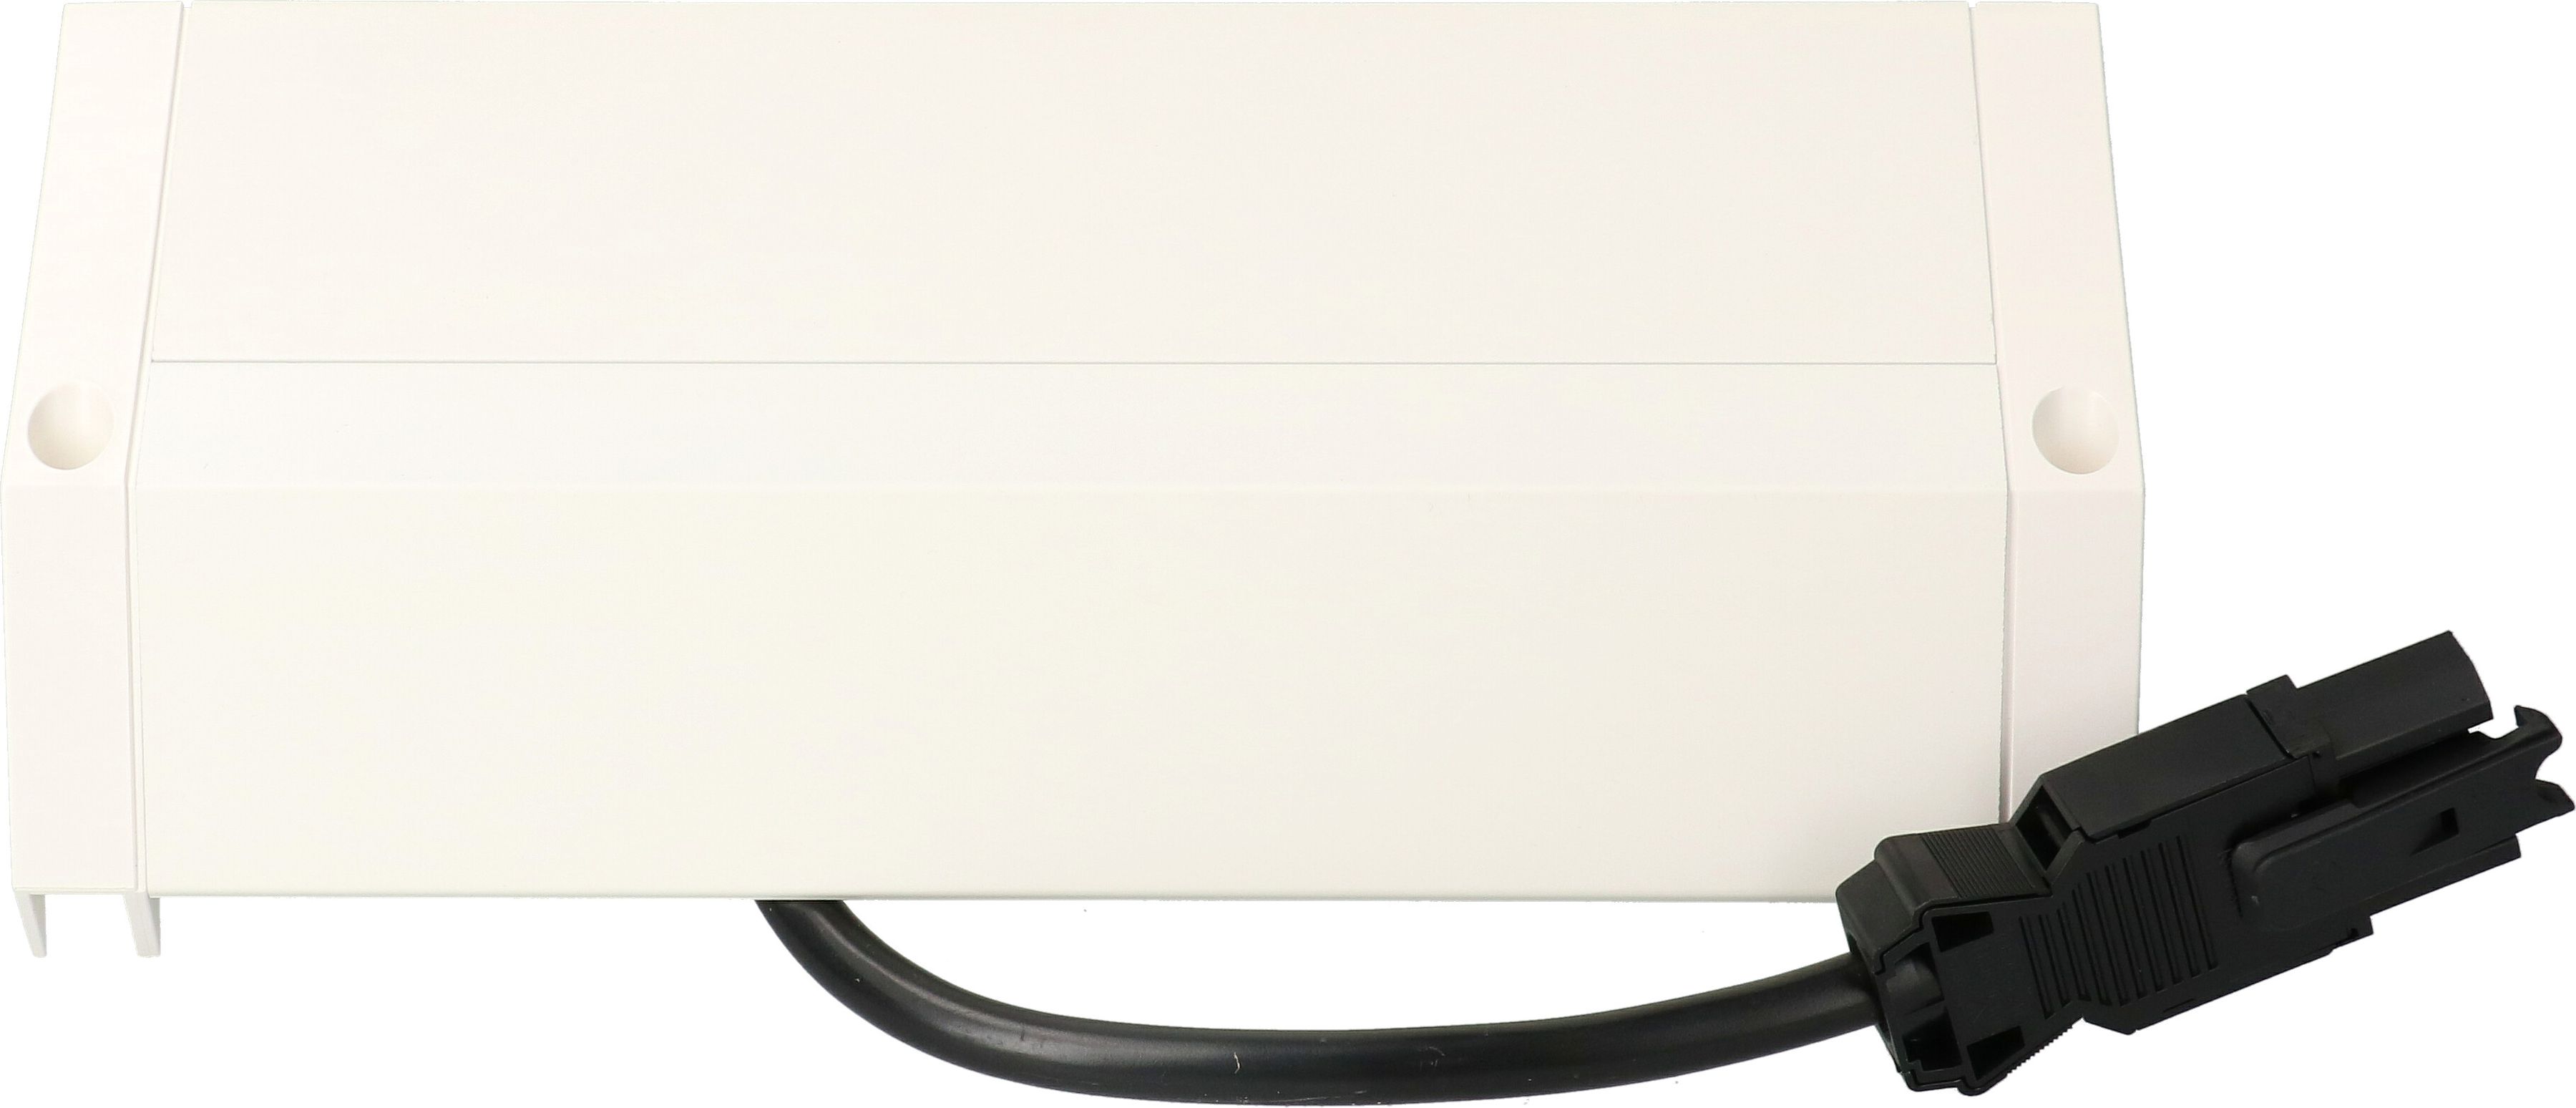 DESK 2 bianco 2x tipo13 1x caricatore USB A/C